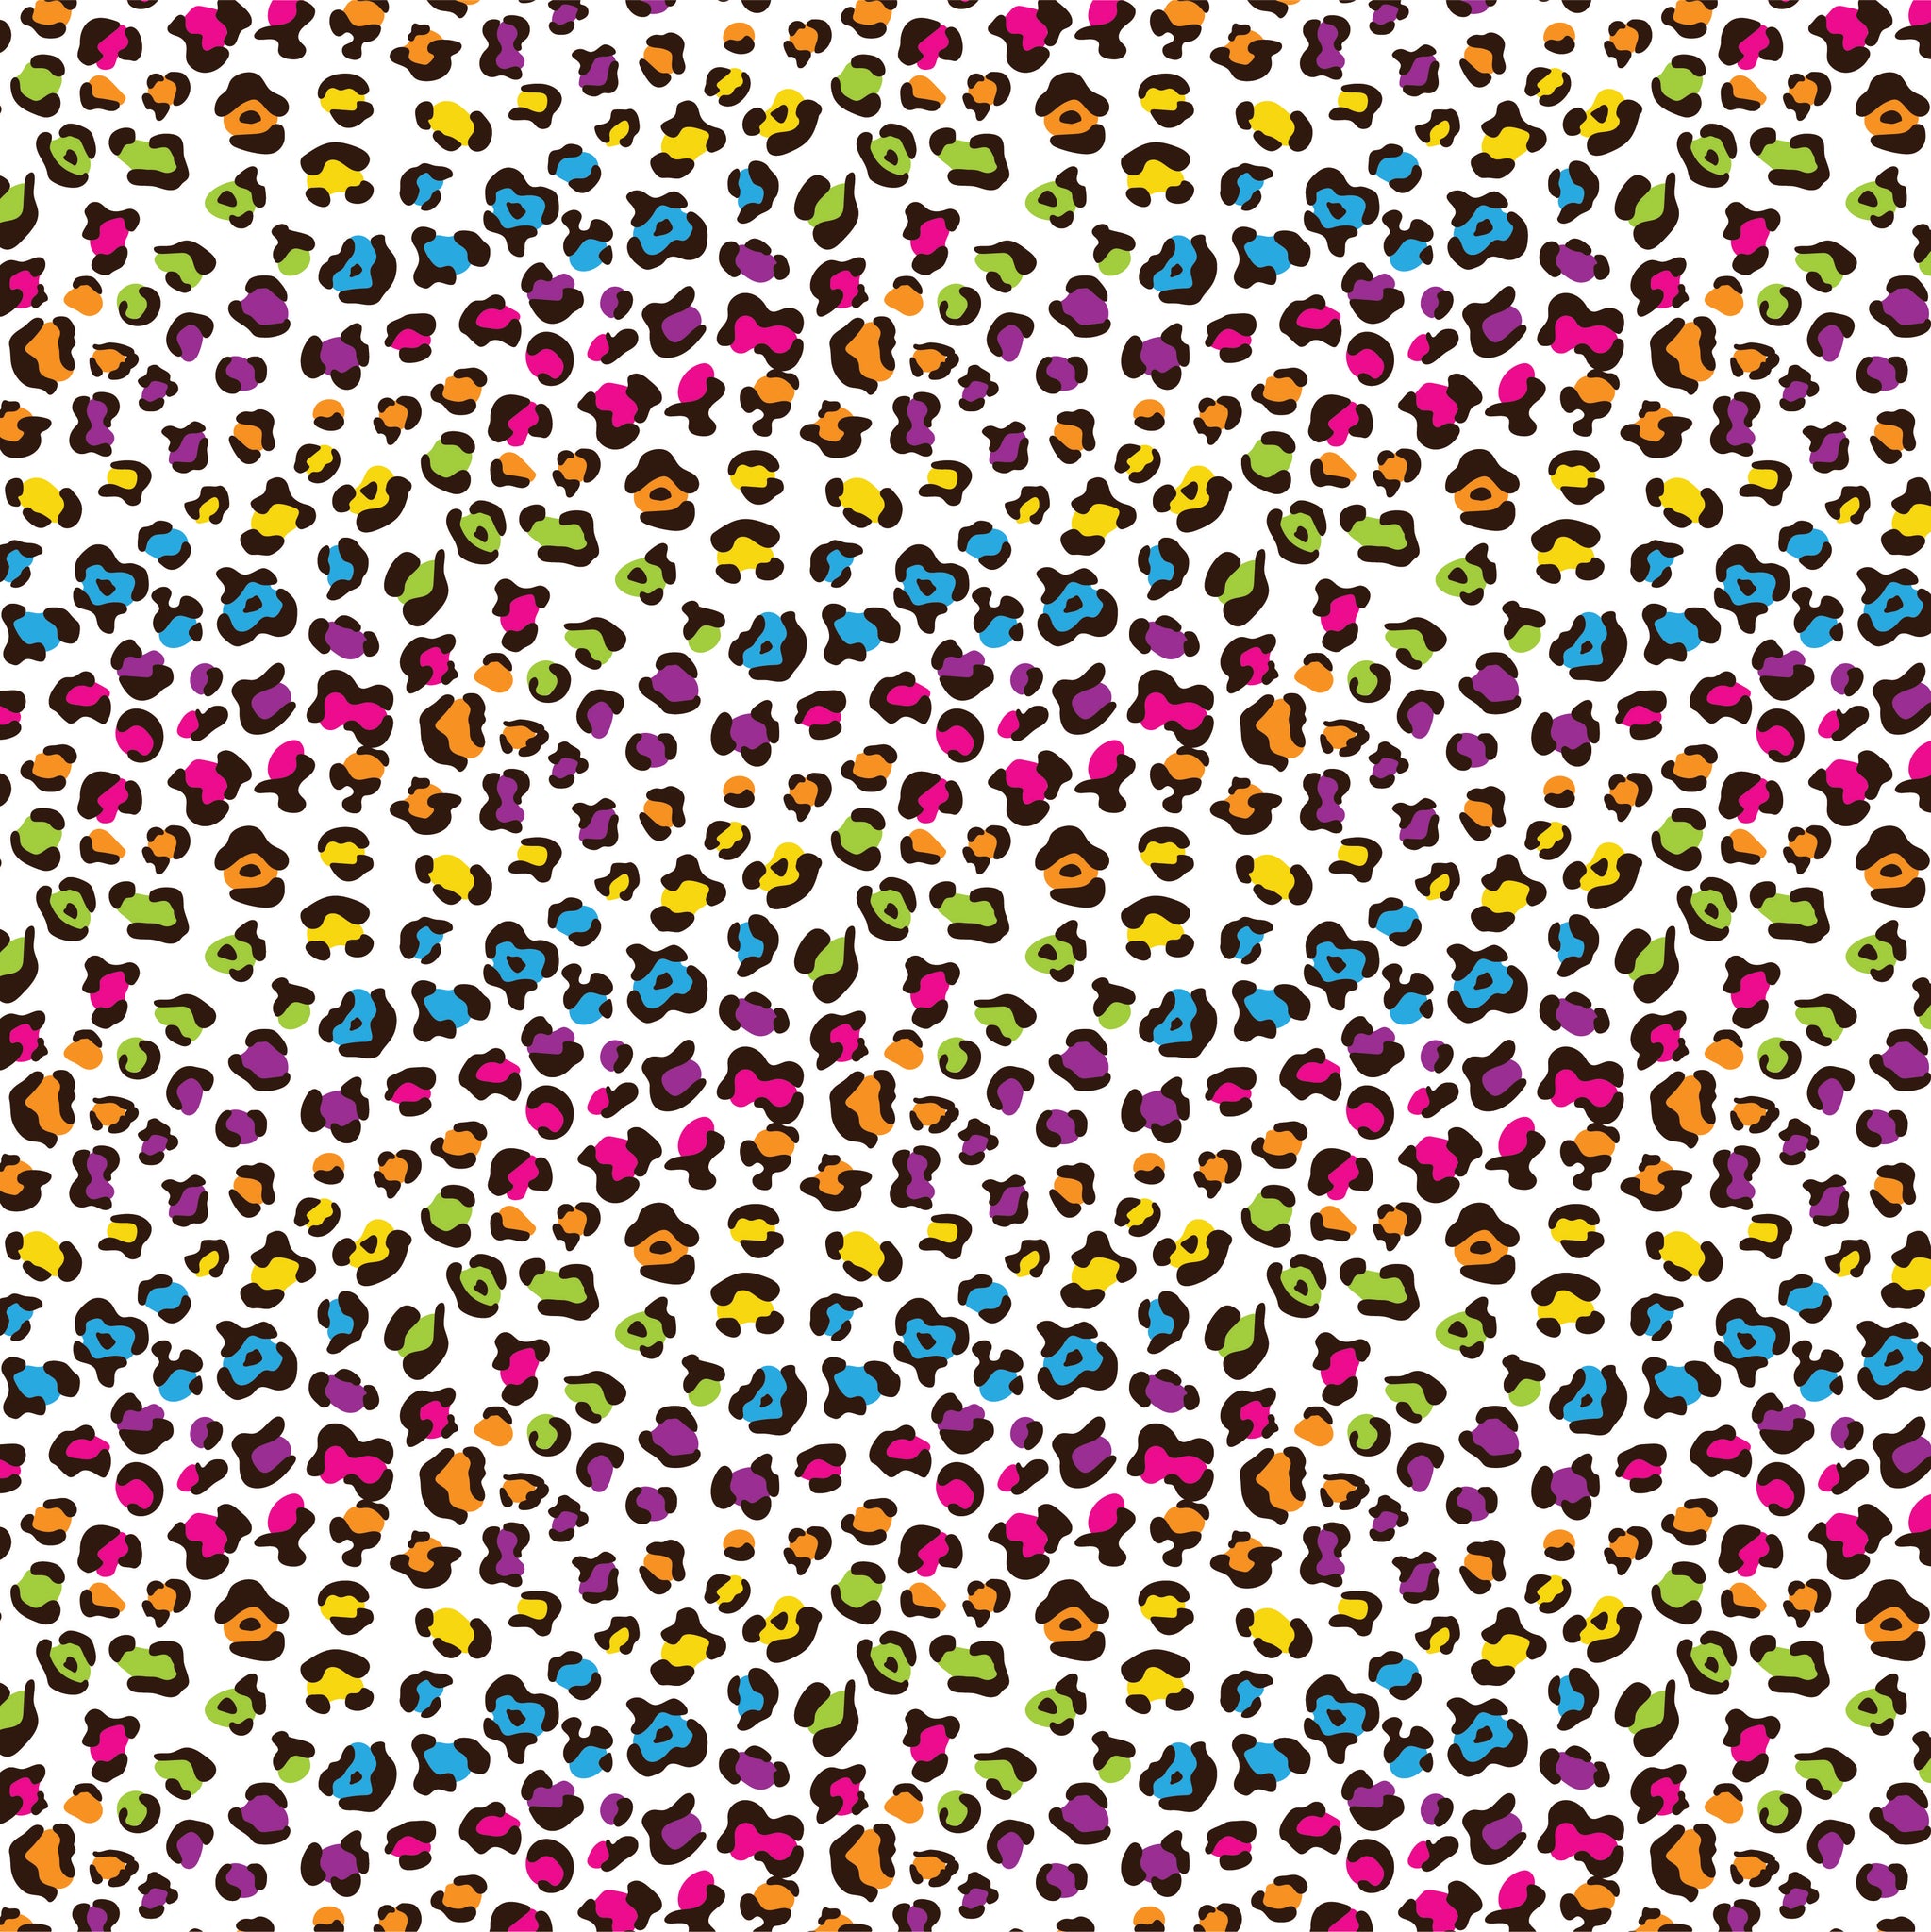 Pattern Print: Lisa Frank Inspired